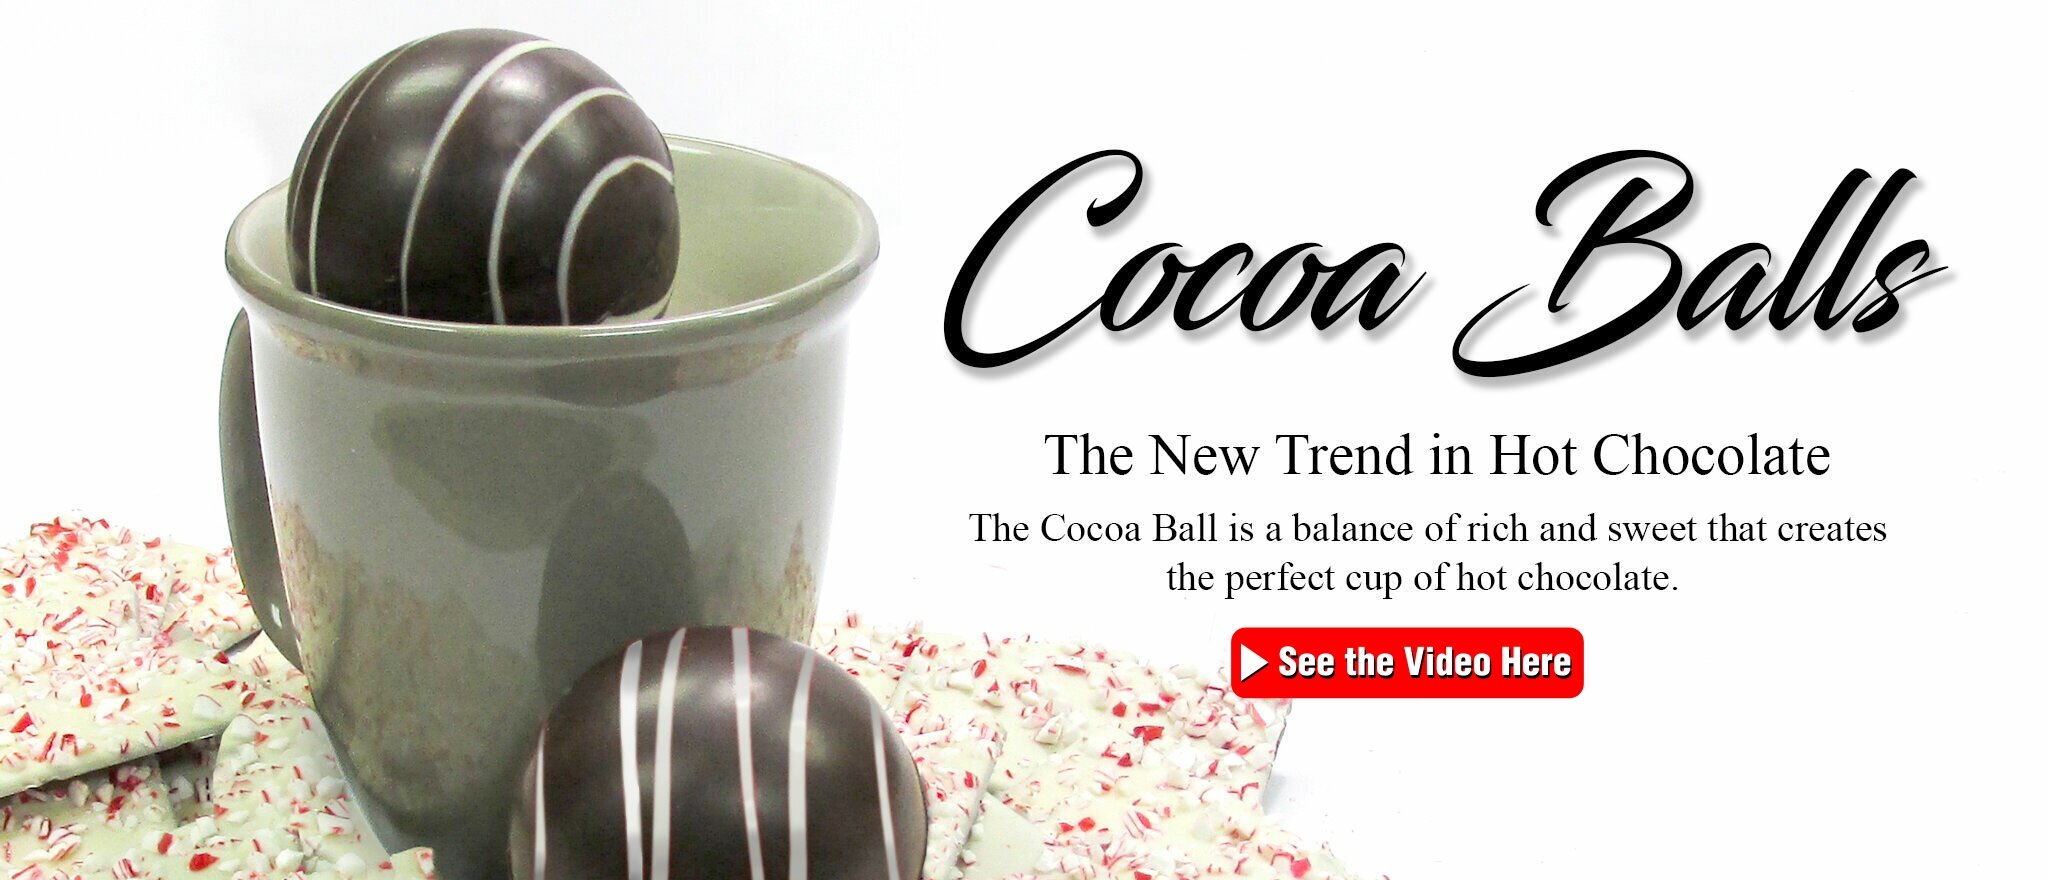 Cocoa Balls